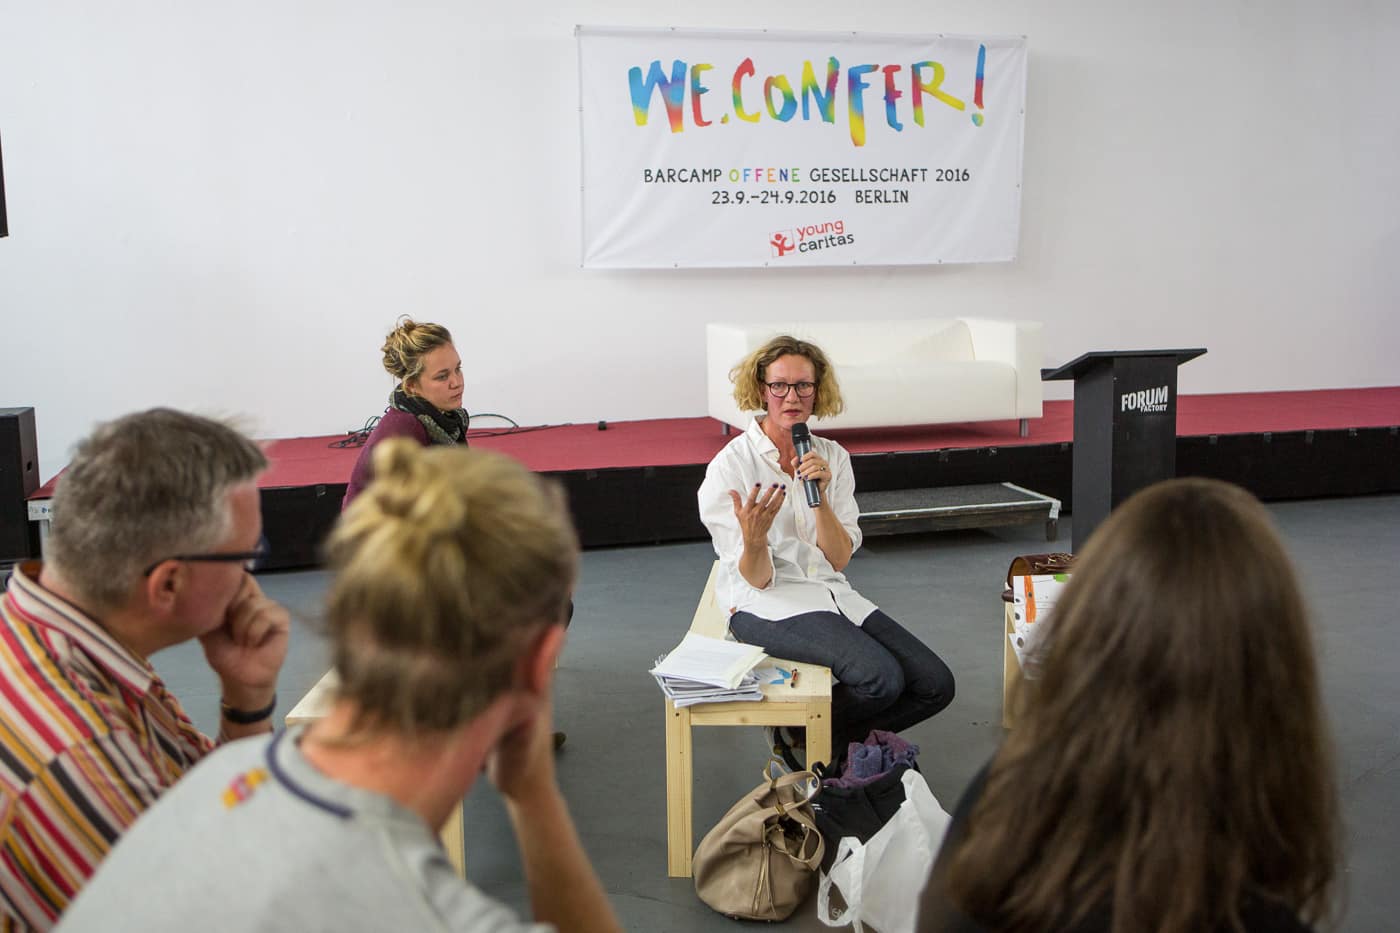 youngcaritas barcamp zum Thema "Offene Gesellschaft" Foto: Walter Wetzler